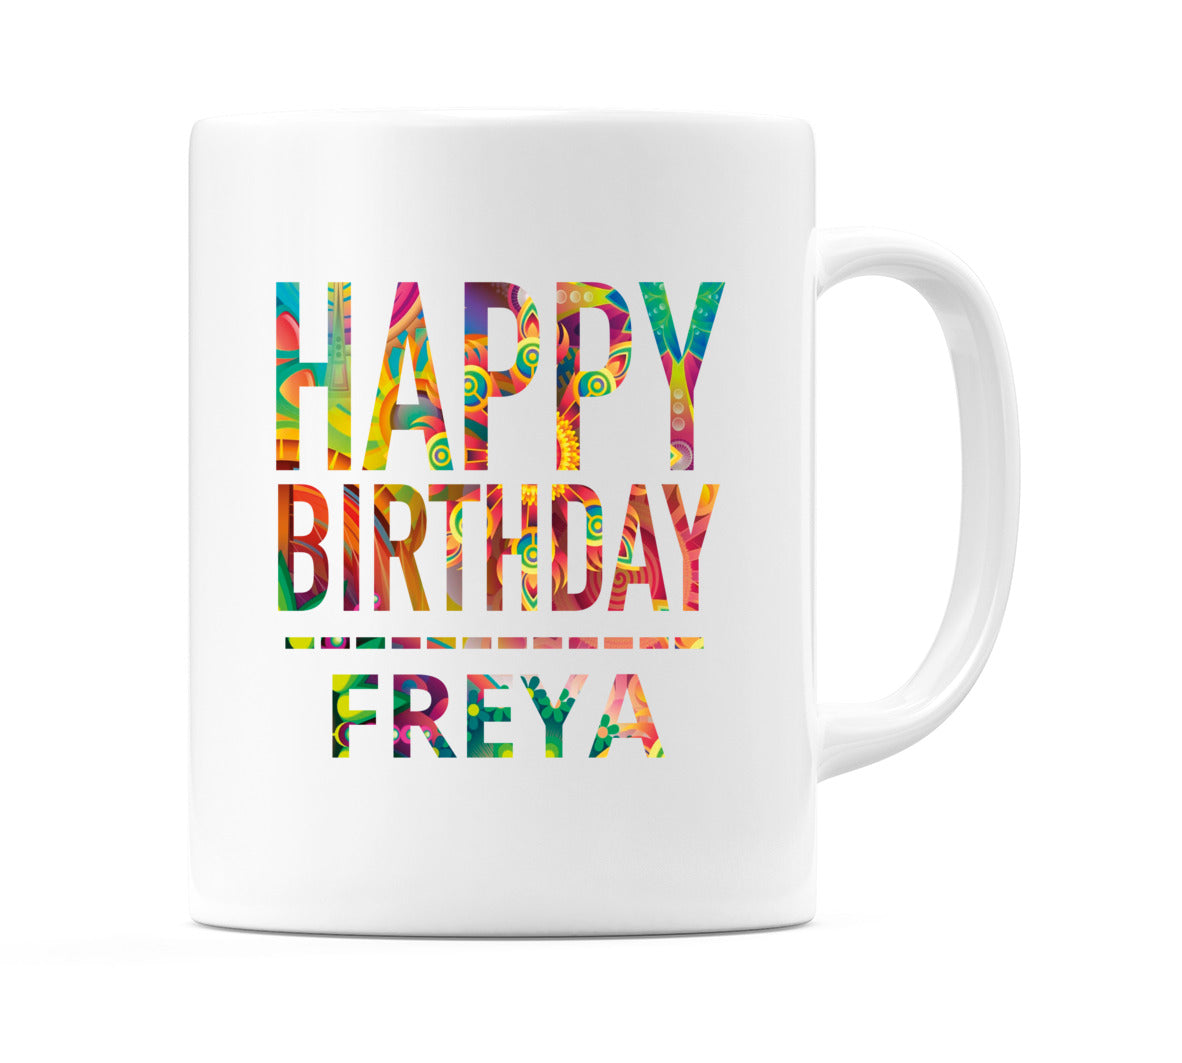 Happy Birthday Freya (Tie Dye Effect) Mug Cup by WeDoMugs